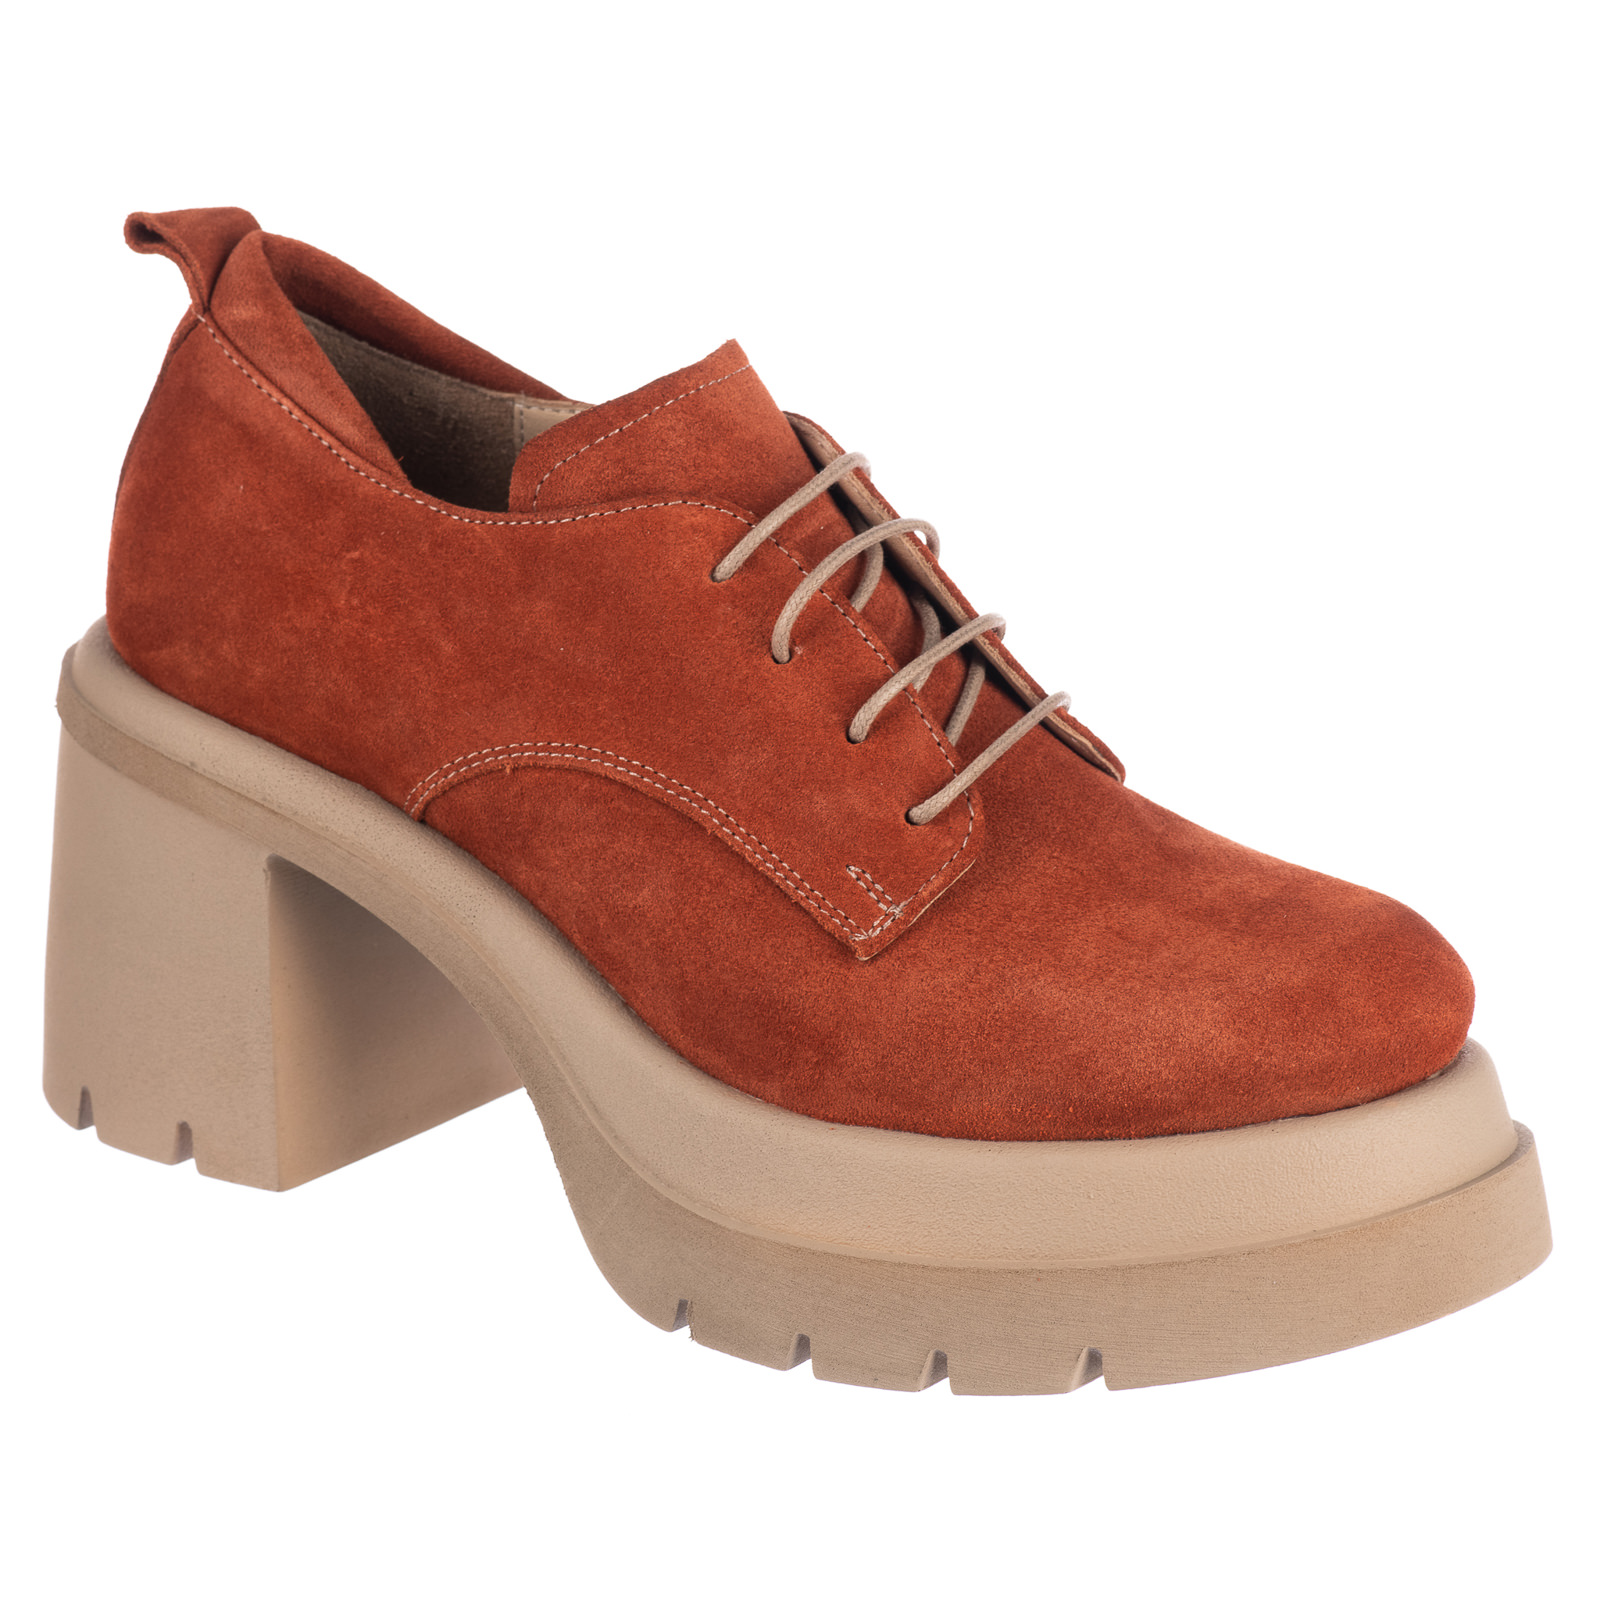 Leather shoes & flats B666 - ORANGE